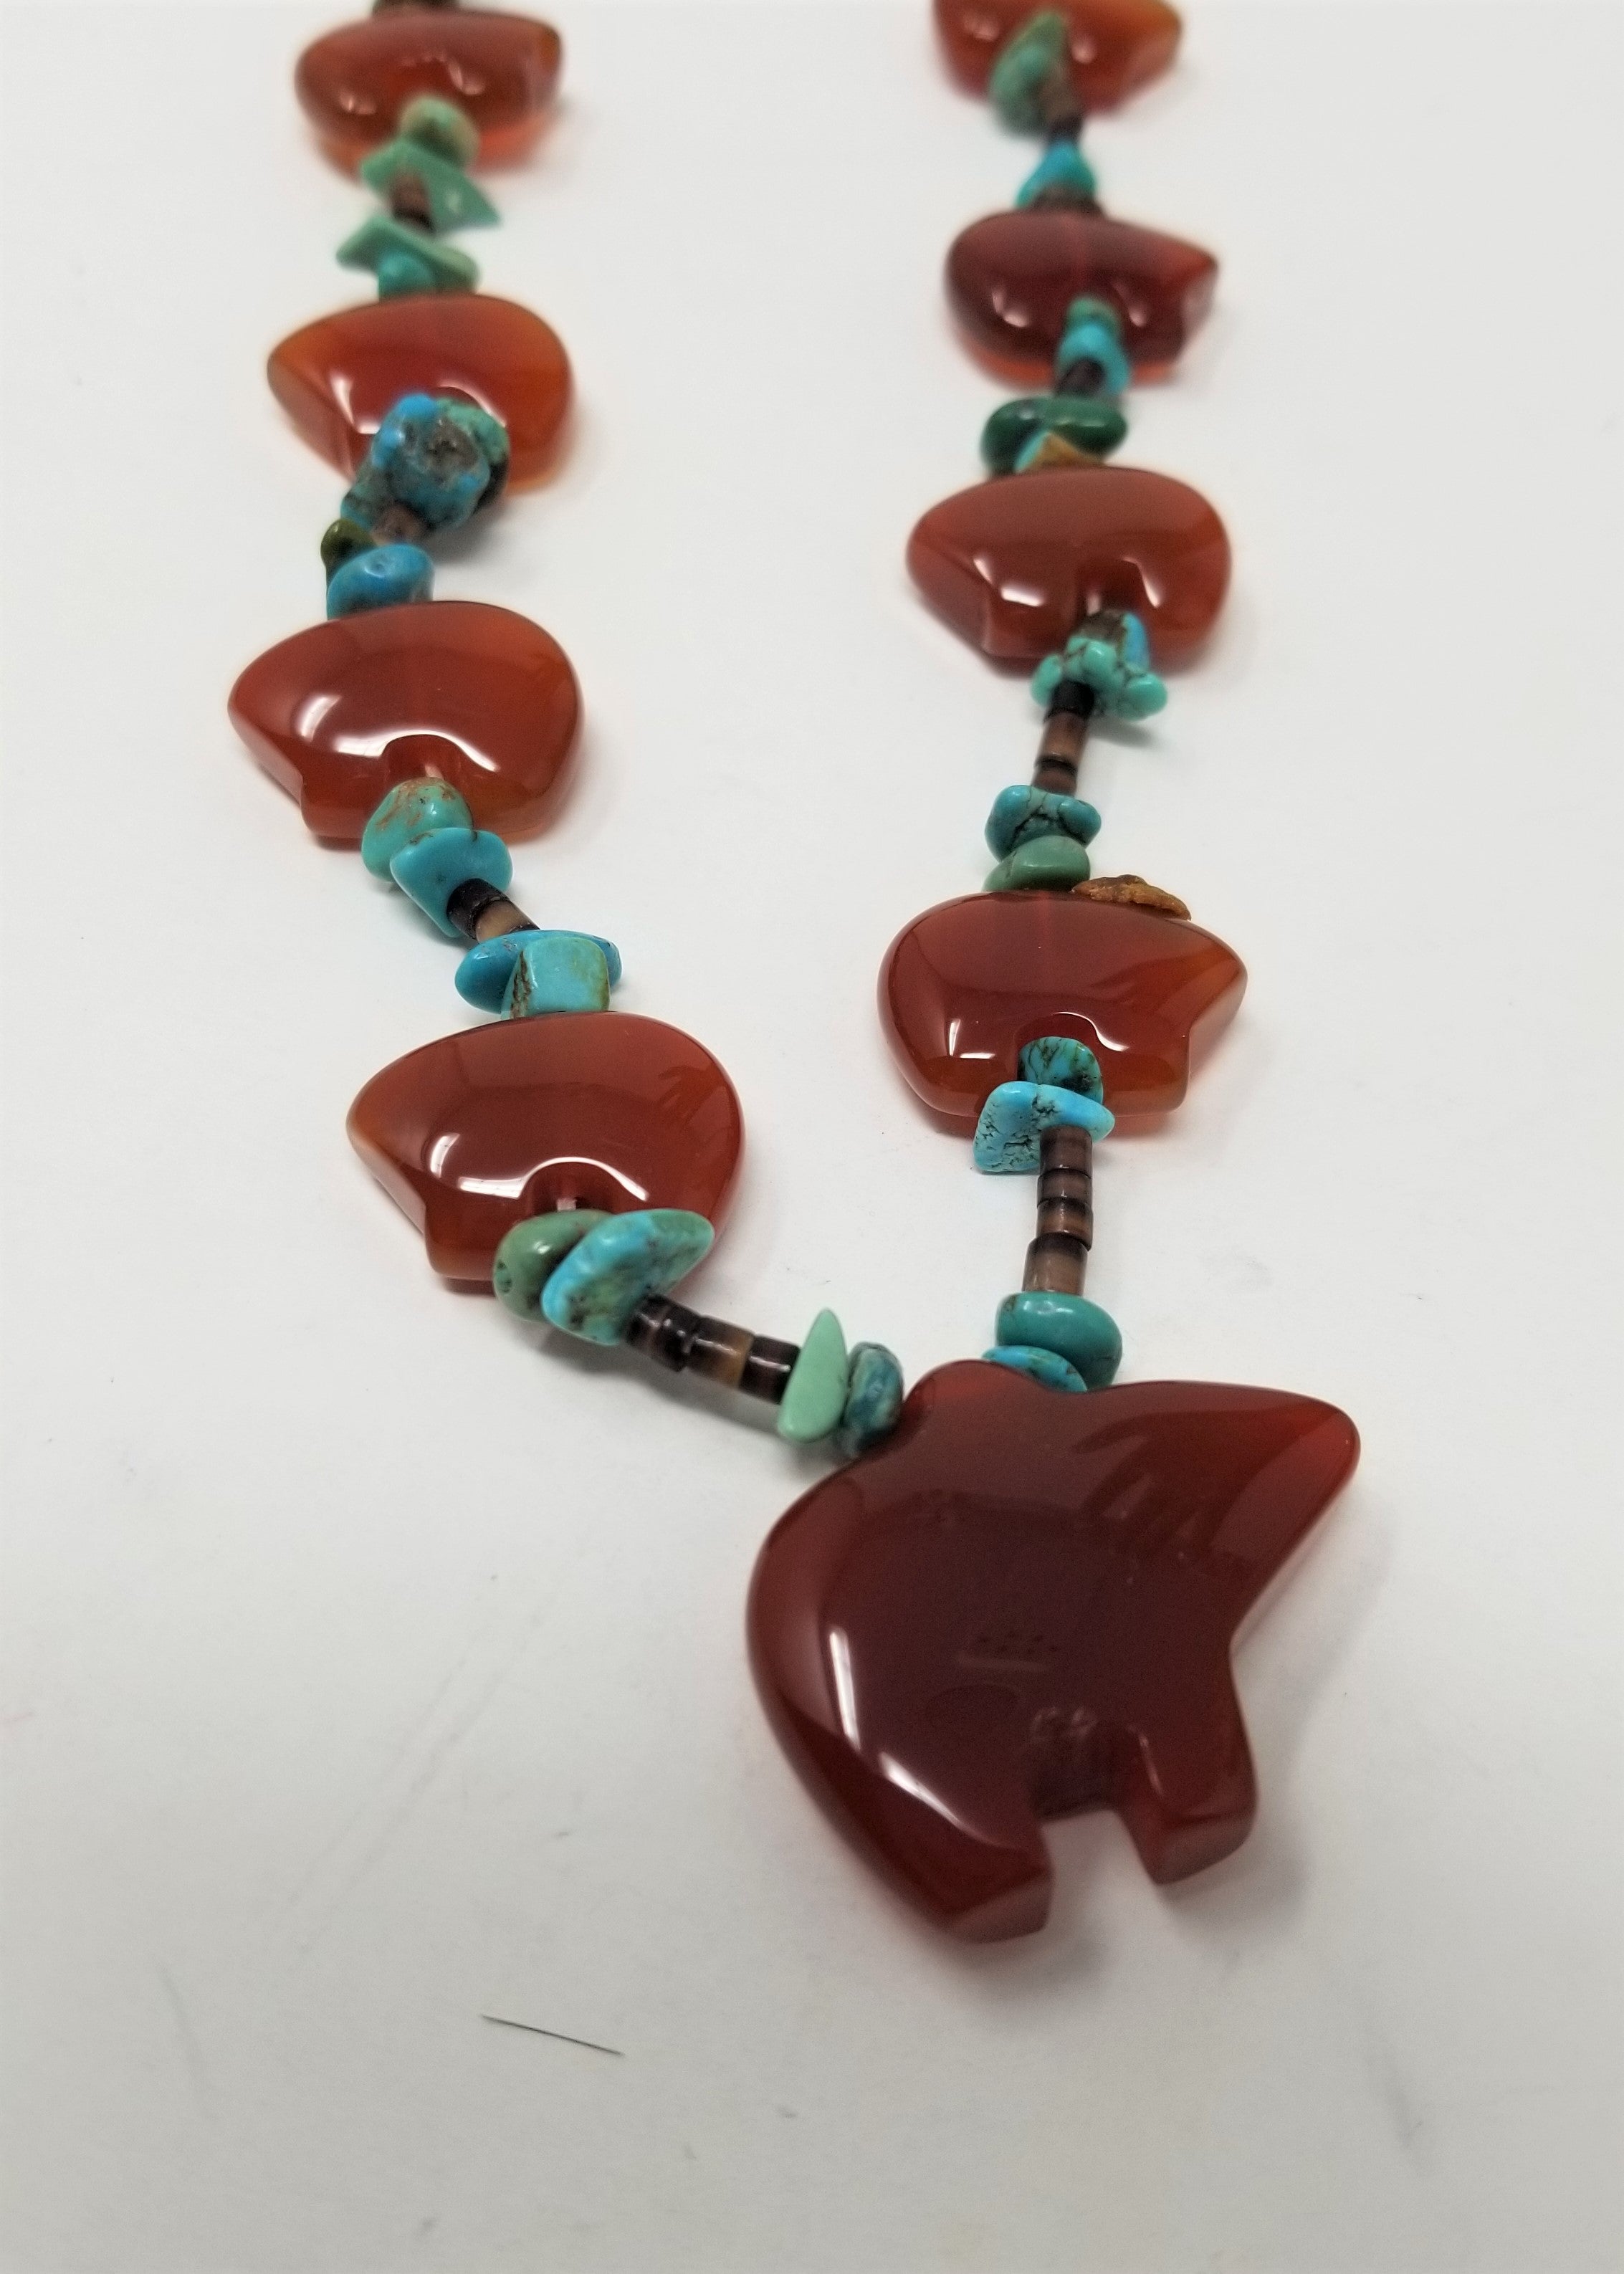 Zuni Bear Necklace Carnelian Turquoise and Heshi Shell